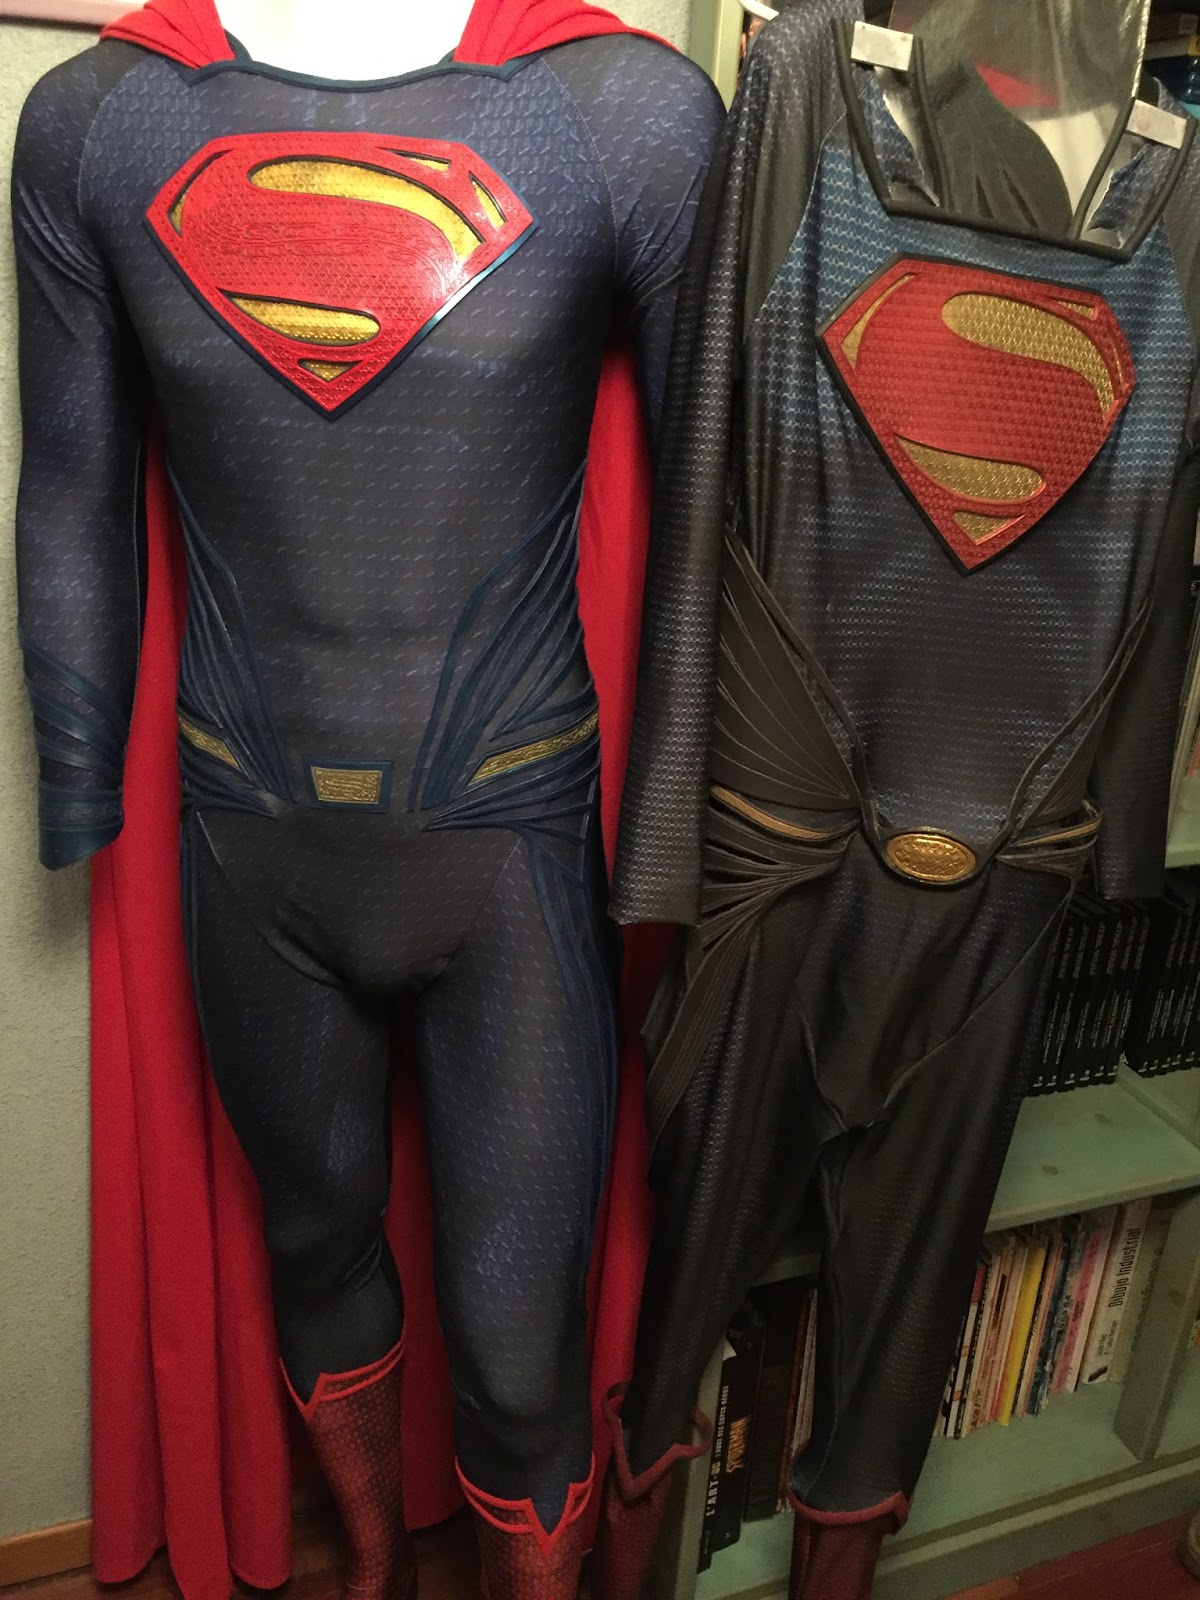 Infantil Distraer dolor de muelas CONSEJO KRYPTONIANO blog de coleccionismo de Superman: Réplica del traje de  'Batman v. Superman'